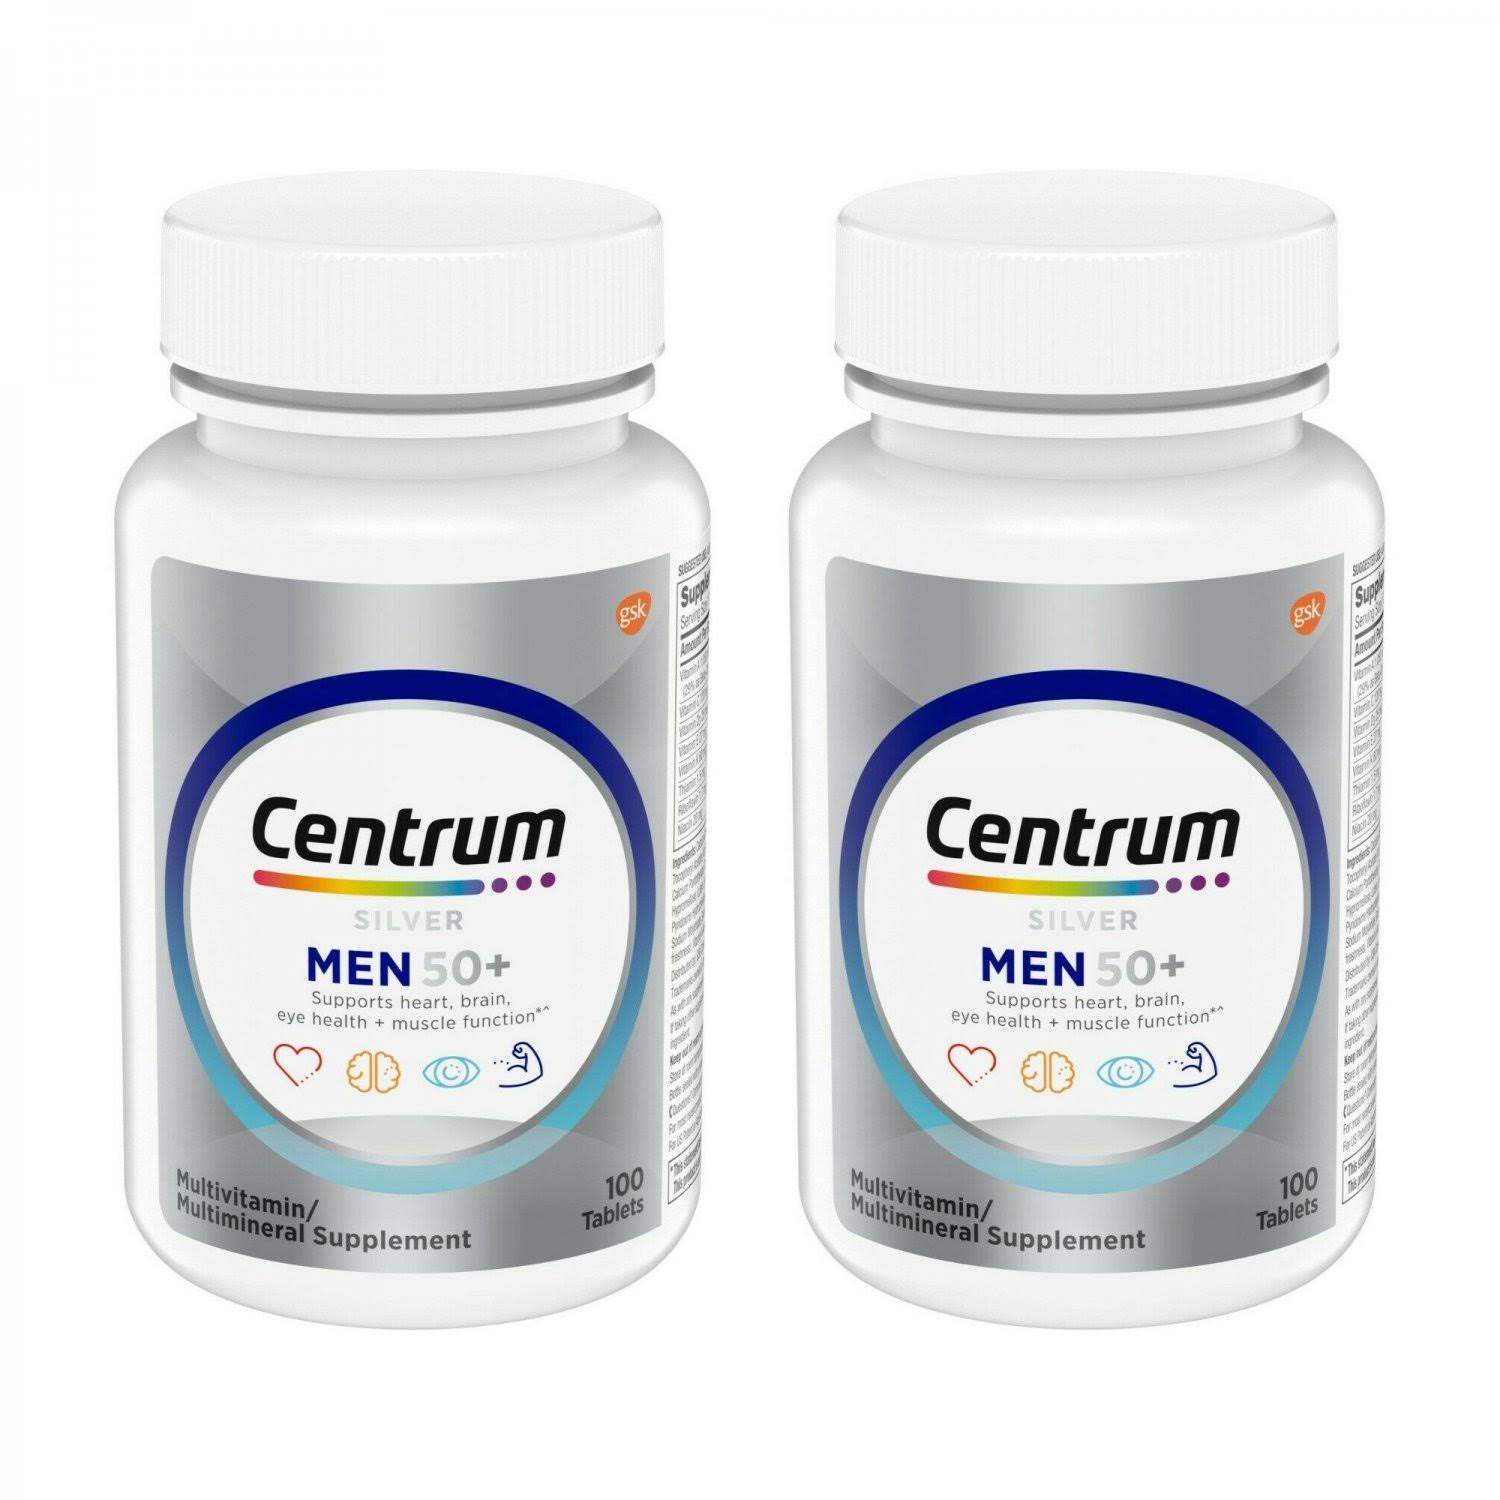 Centrum silver multivitamin for men 50 plus, multivitamin/multimineral supplement - 100 count